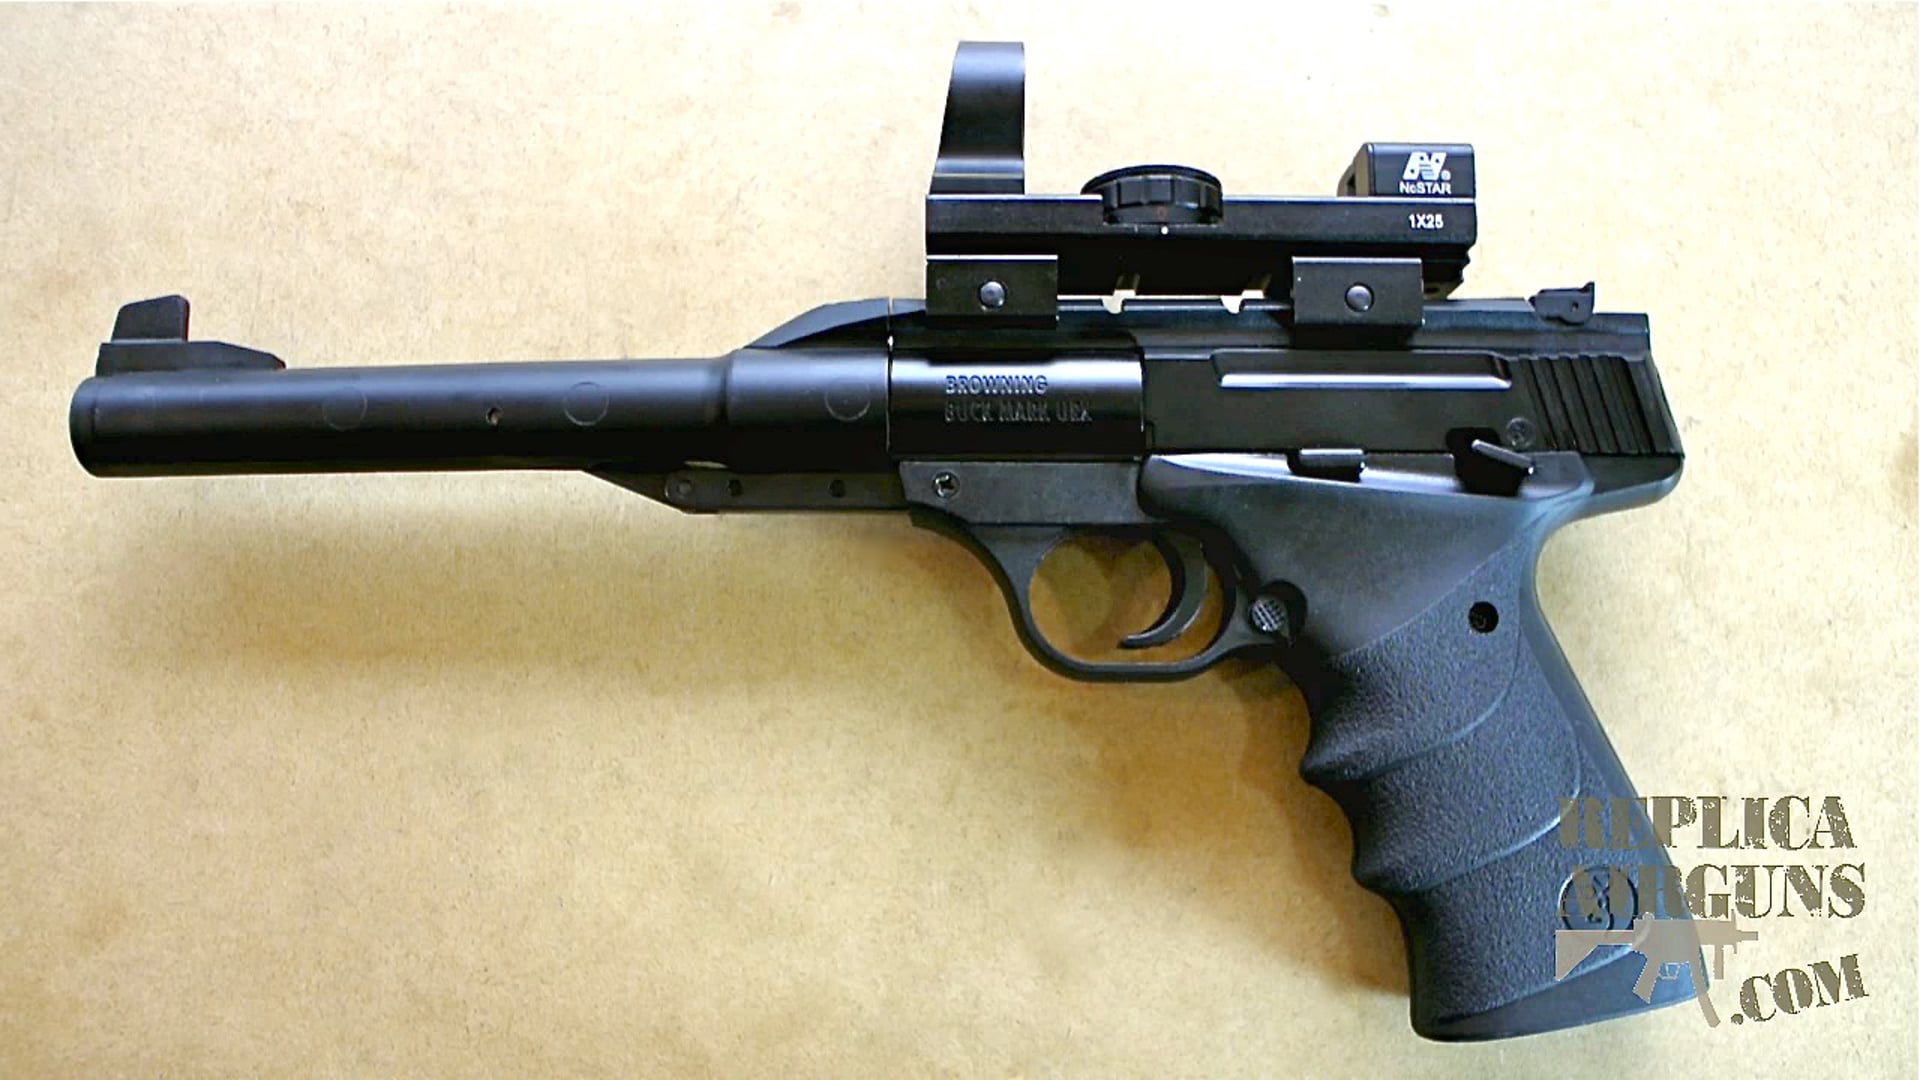 Umarex Browning Buck Mark URX Pellet Pistol Table Top & Shooting Review